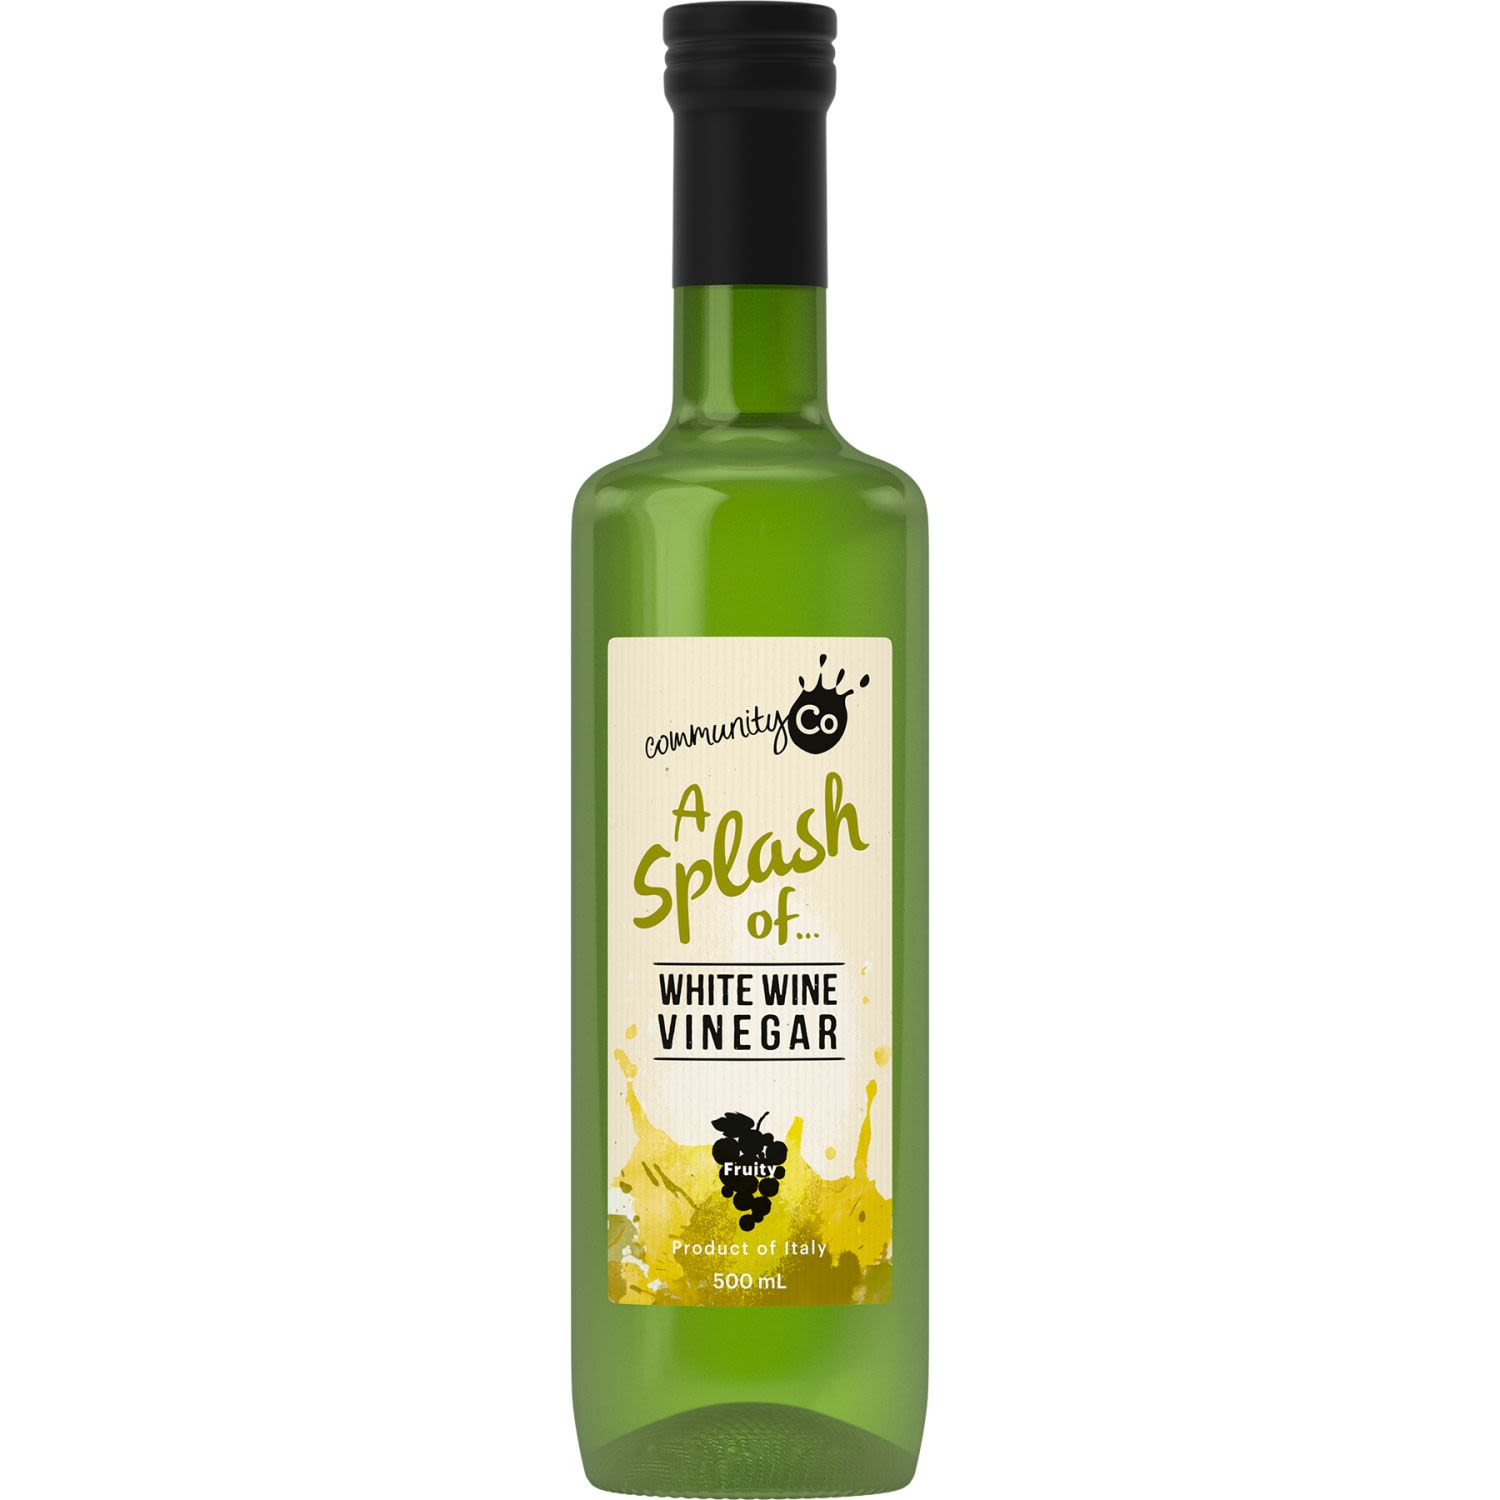 Community Co White Wine Vinegar 500ml